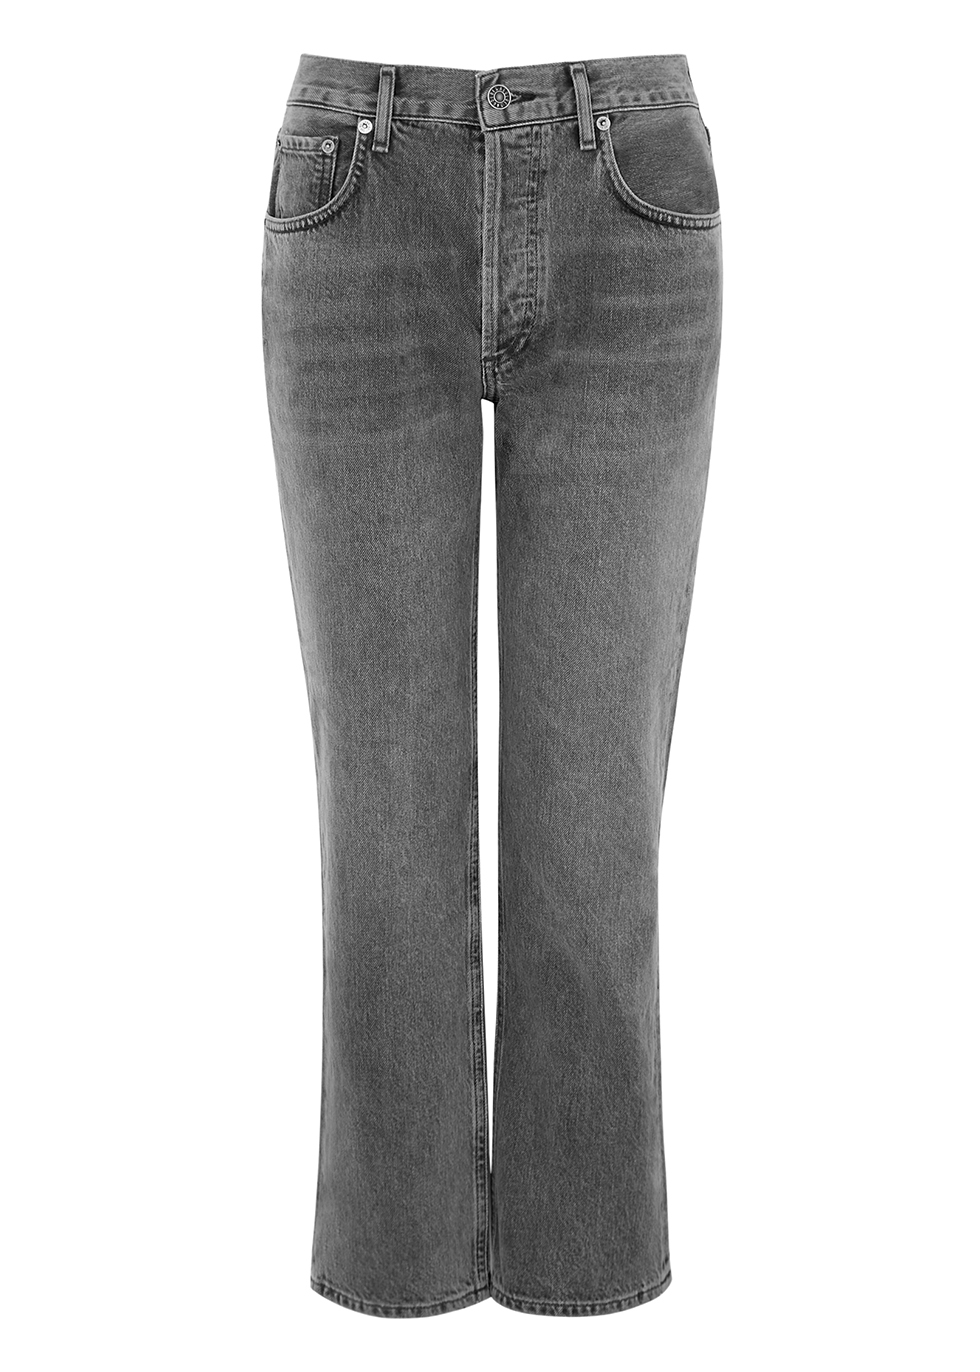 Ripley grey straight-leg jeans